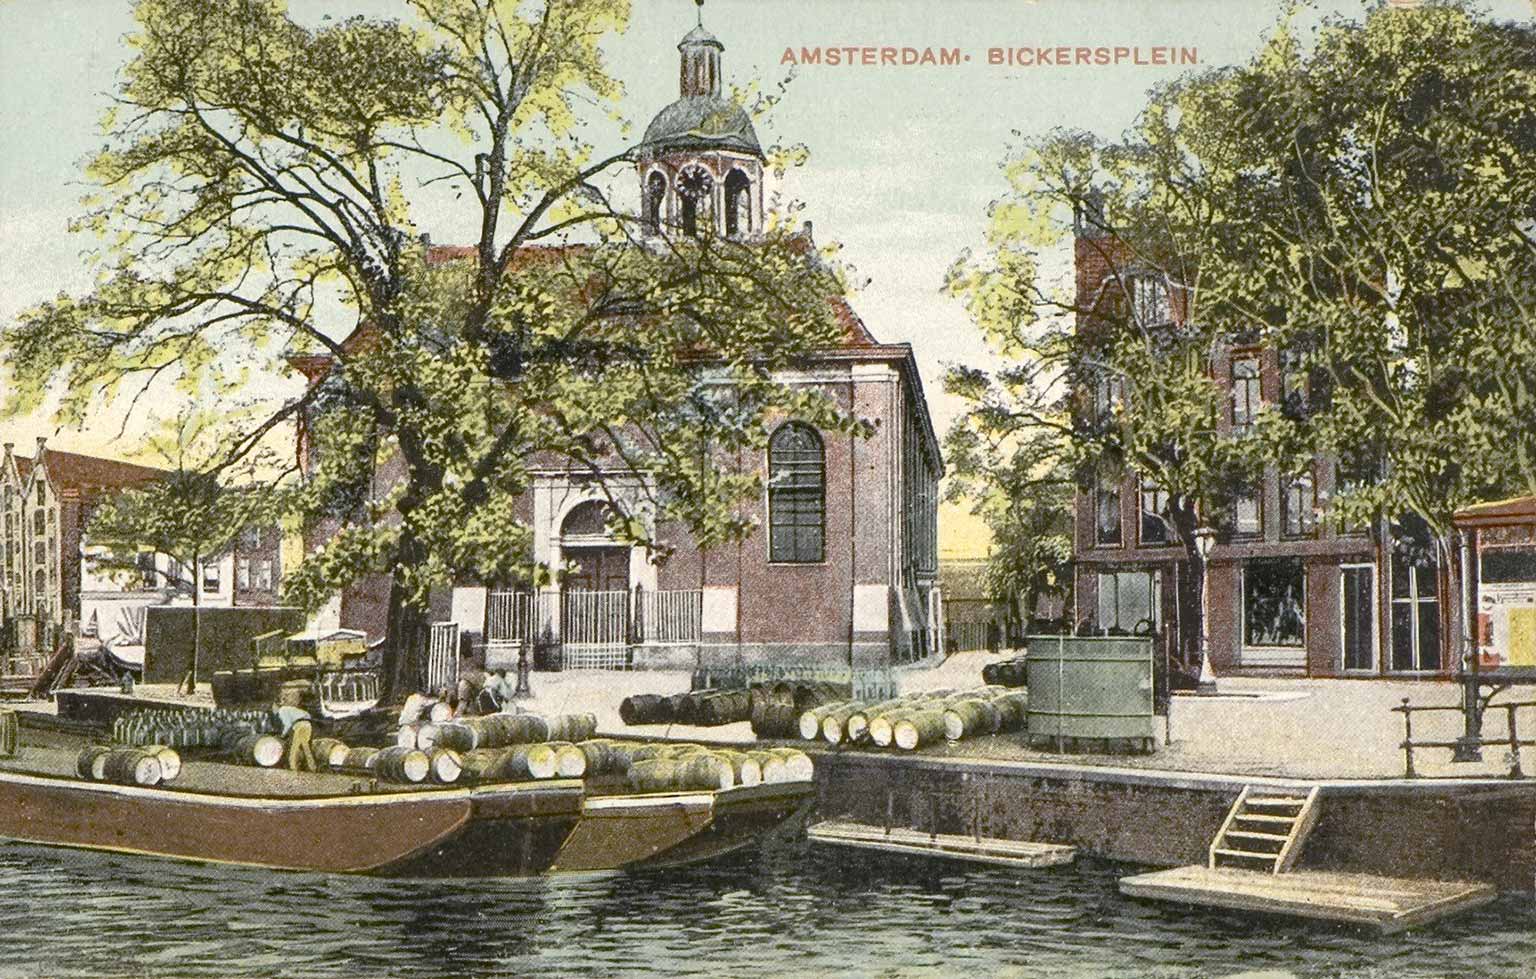 Eilandskerk on Bickerseiland, Amsterdam, postcard from 1920